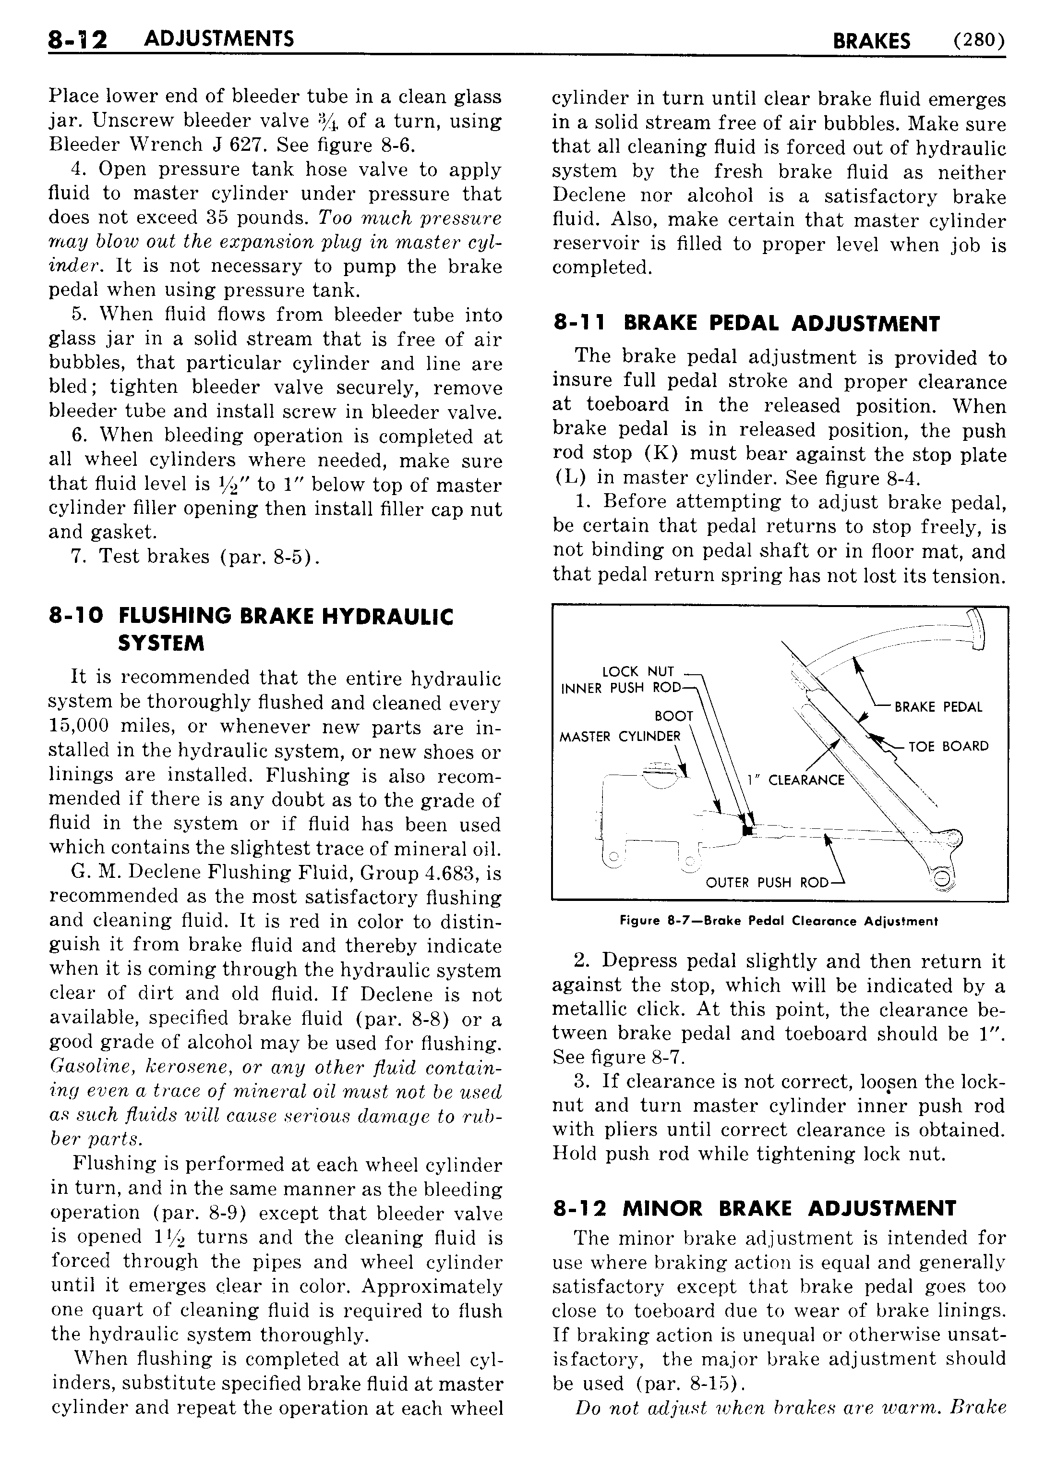 n_09 1951 Buick Shop Manual - Brakes-012-012.jpg